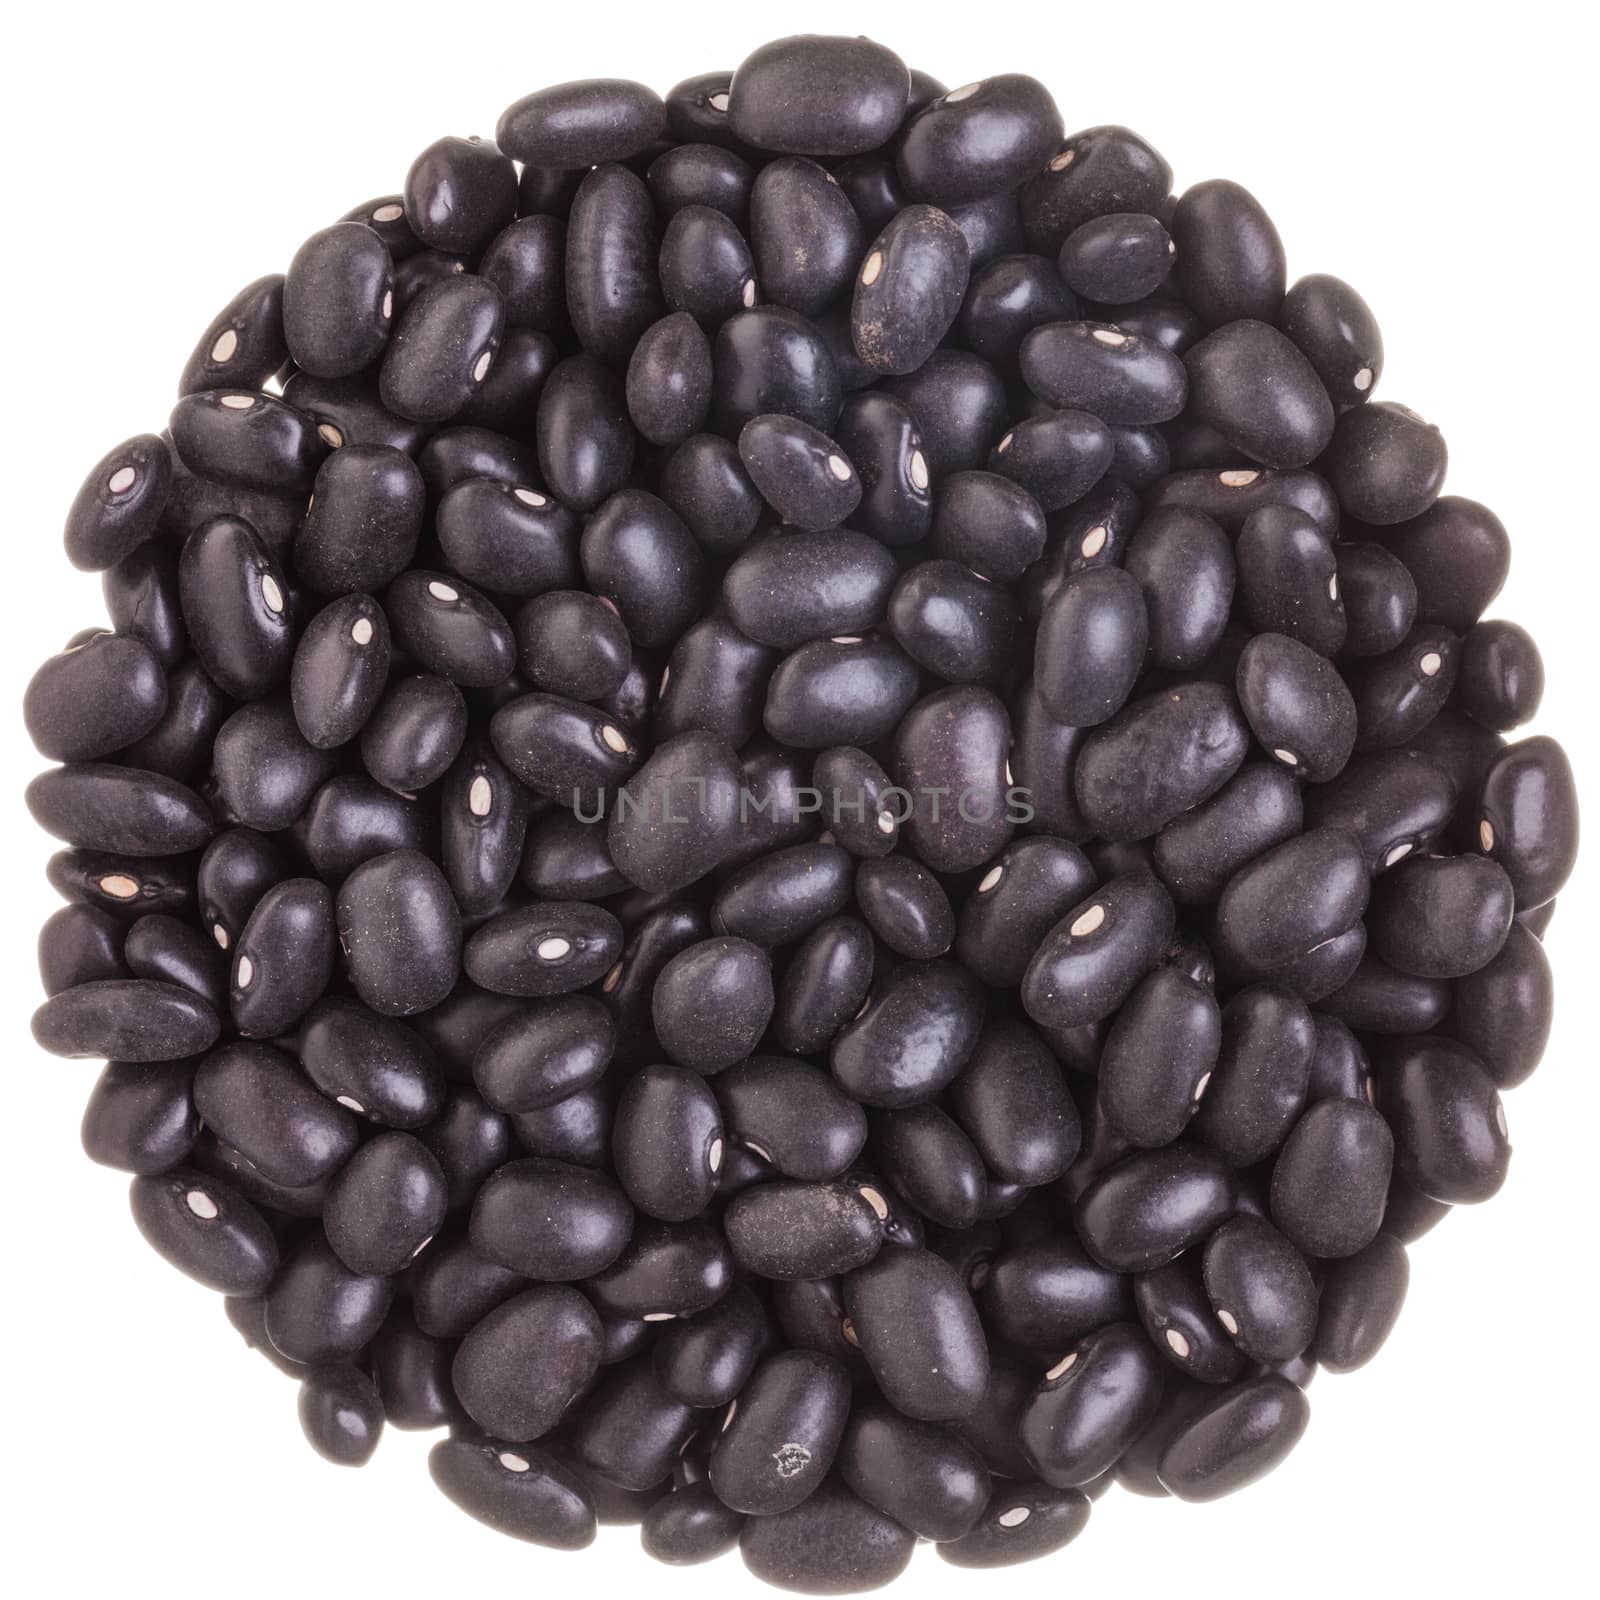 Extreme Closeup Macro Perfect Circle texture of Black Beans